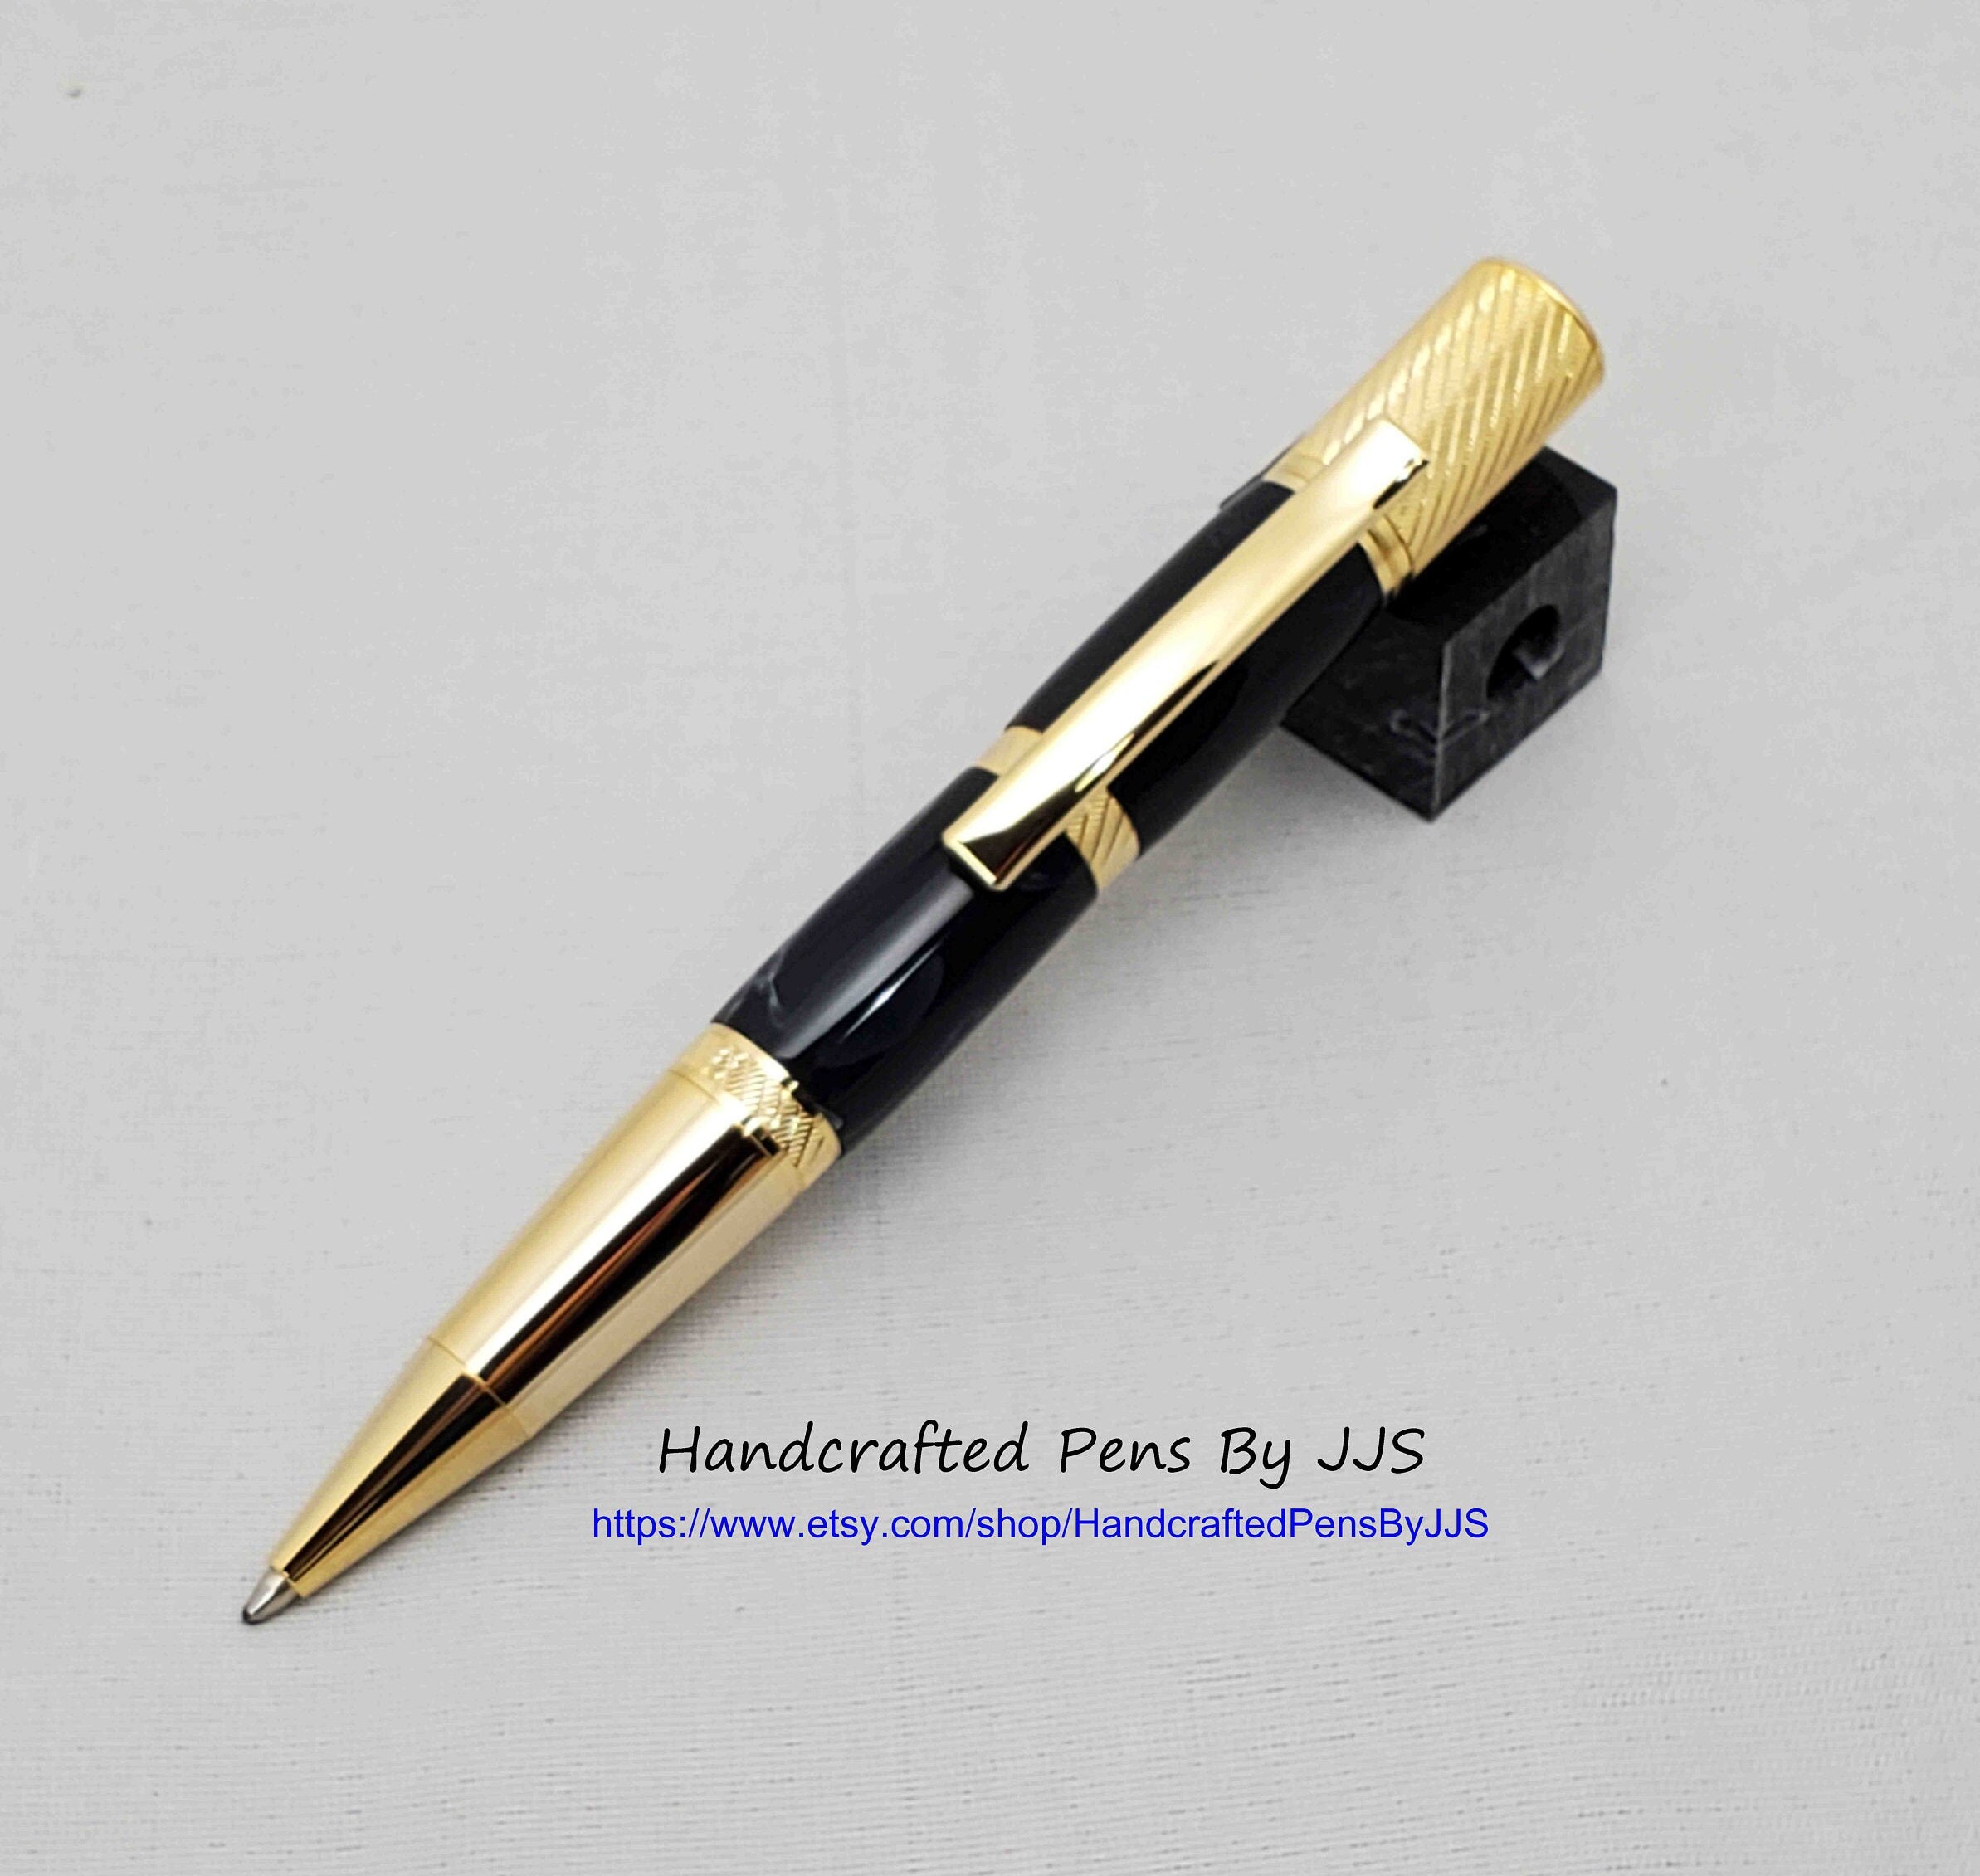 5 Pcs Crystal Pen Diamond Ballpoint Pens Stationery Ballpen 2 in 1 Crystal  Stylus Pen Touch Pen for iPhone iPad Etc 